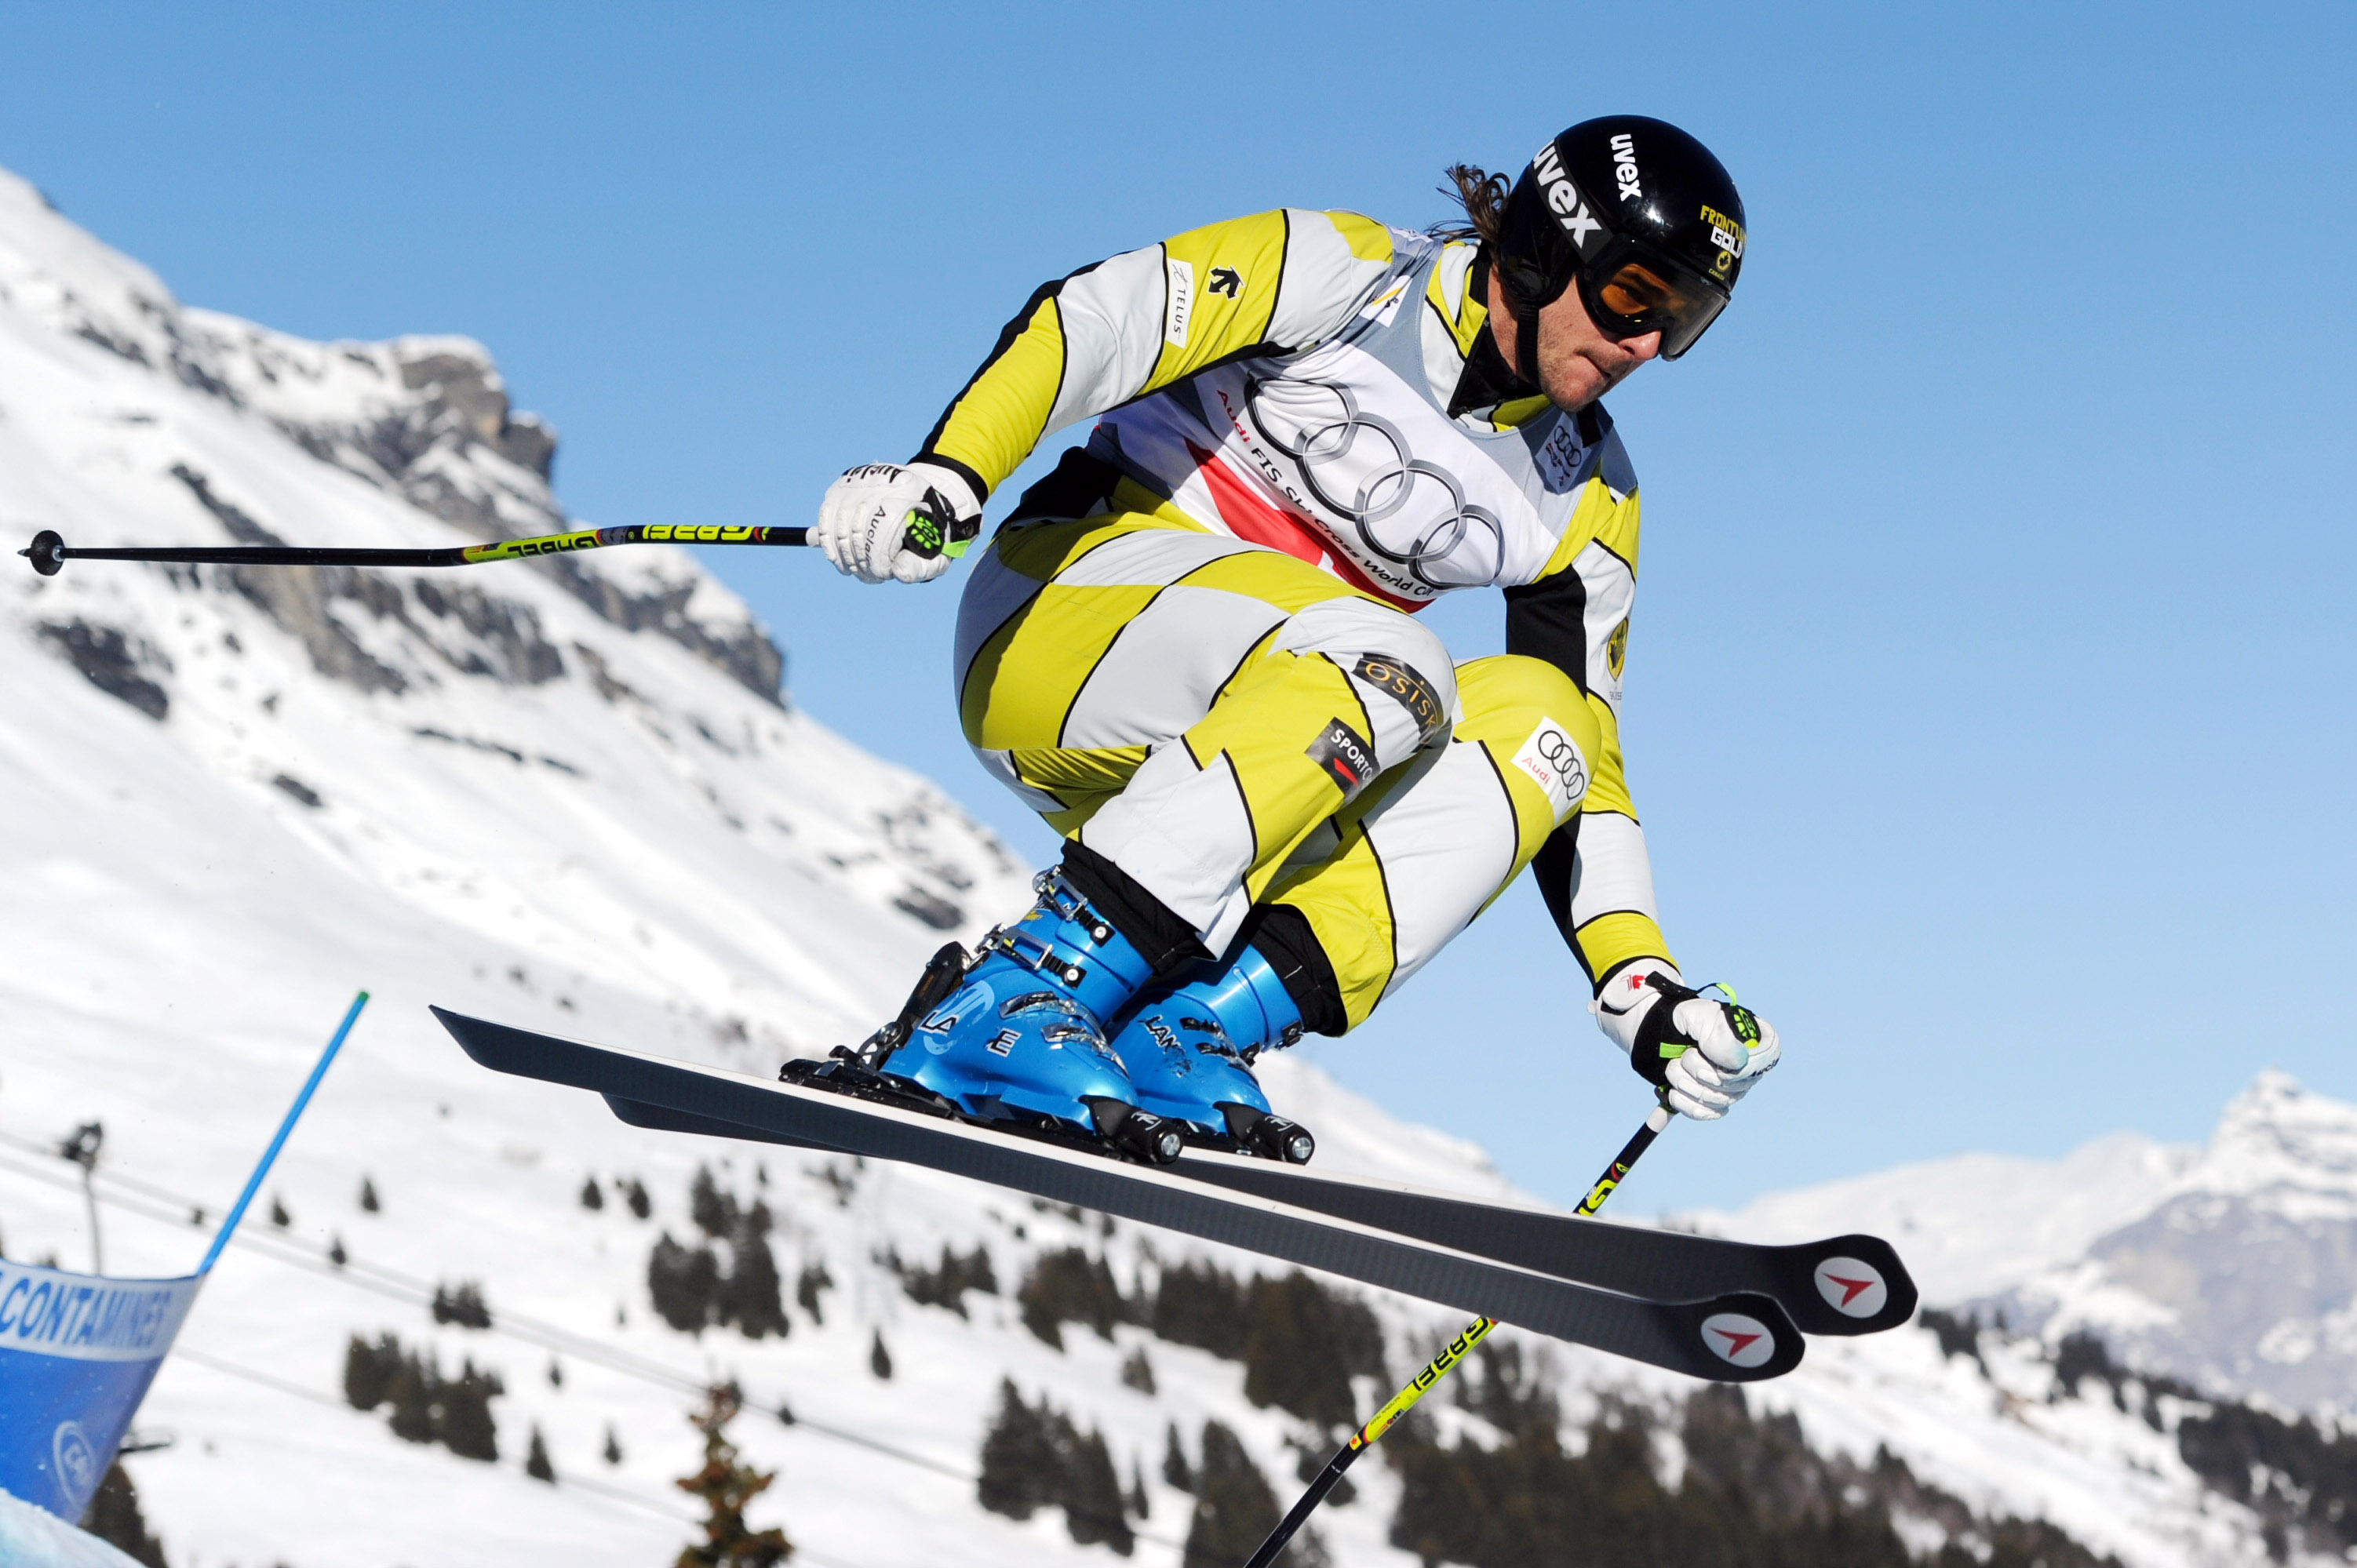 Inspektion rørledning endnu engang Nik Zoricic's legacy lives on in ski cross safety initiatives